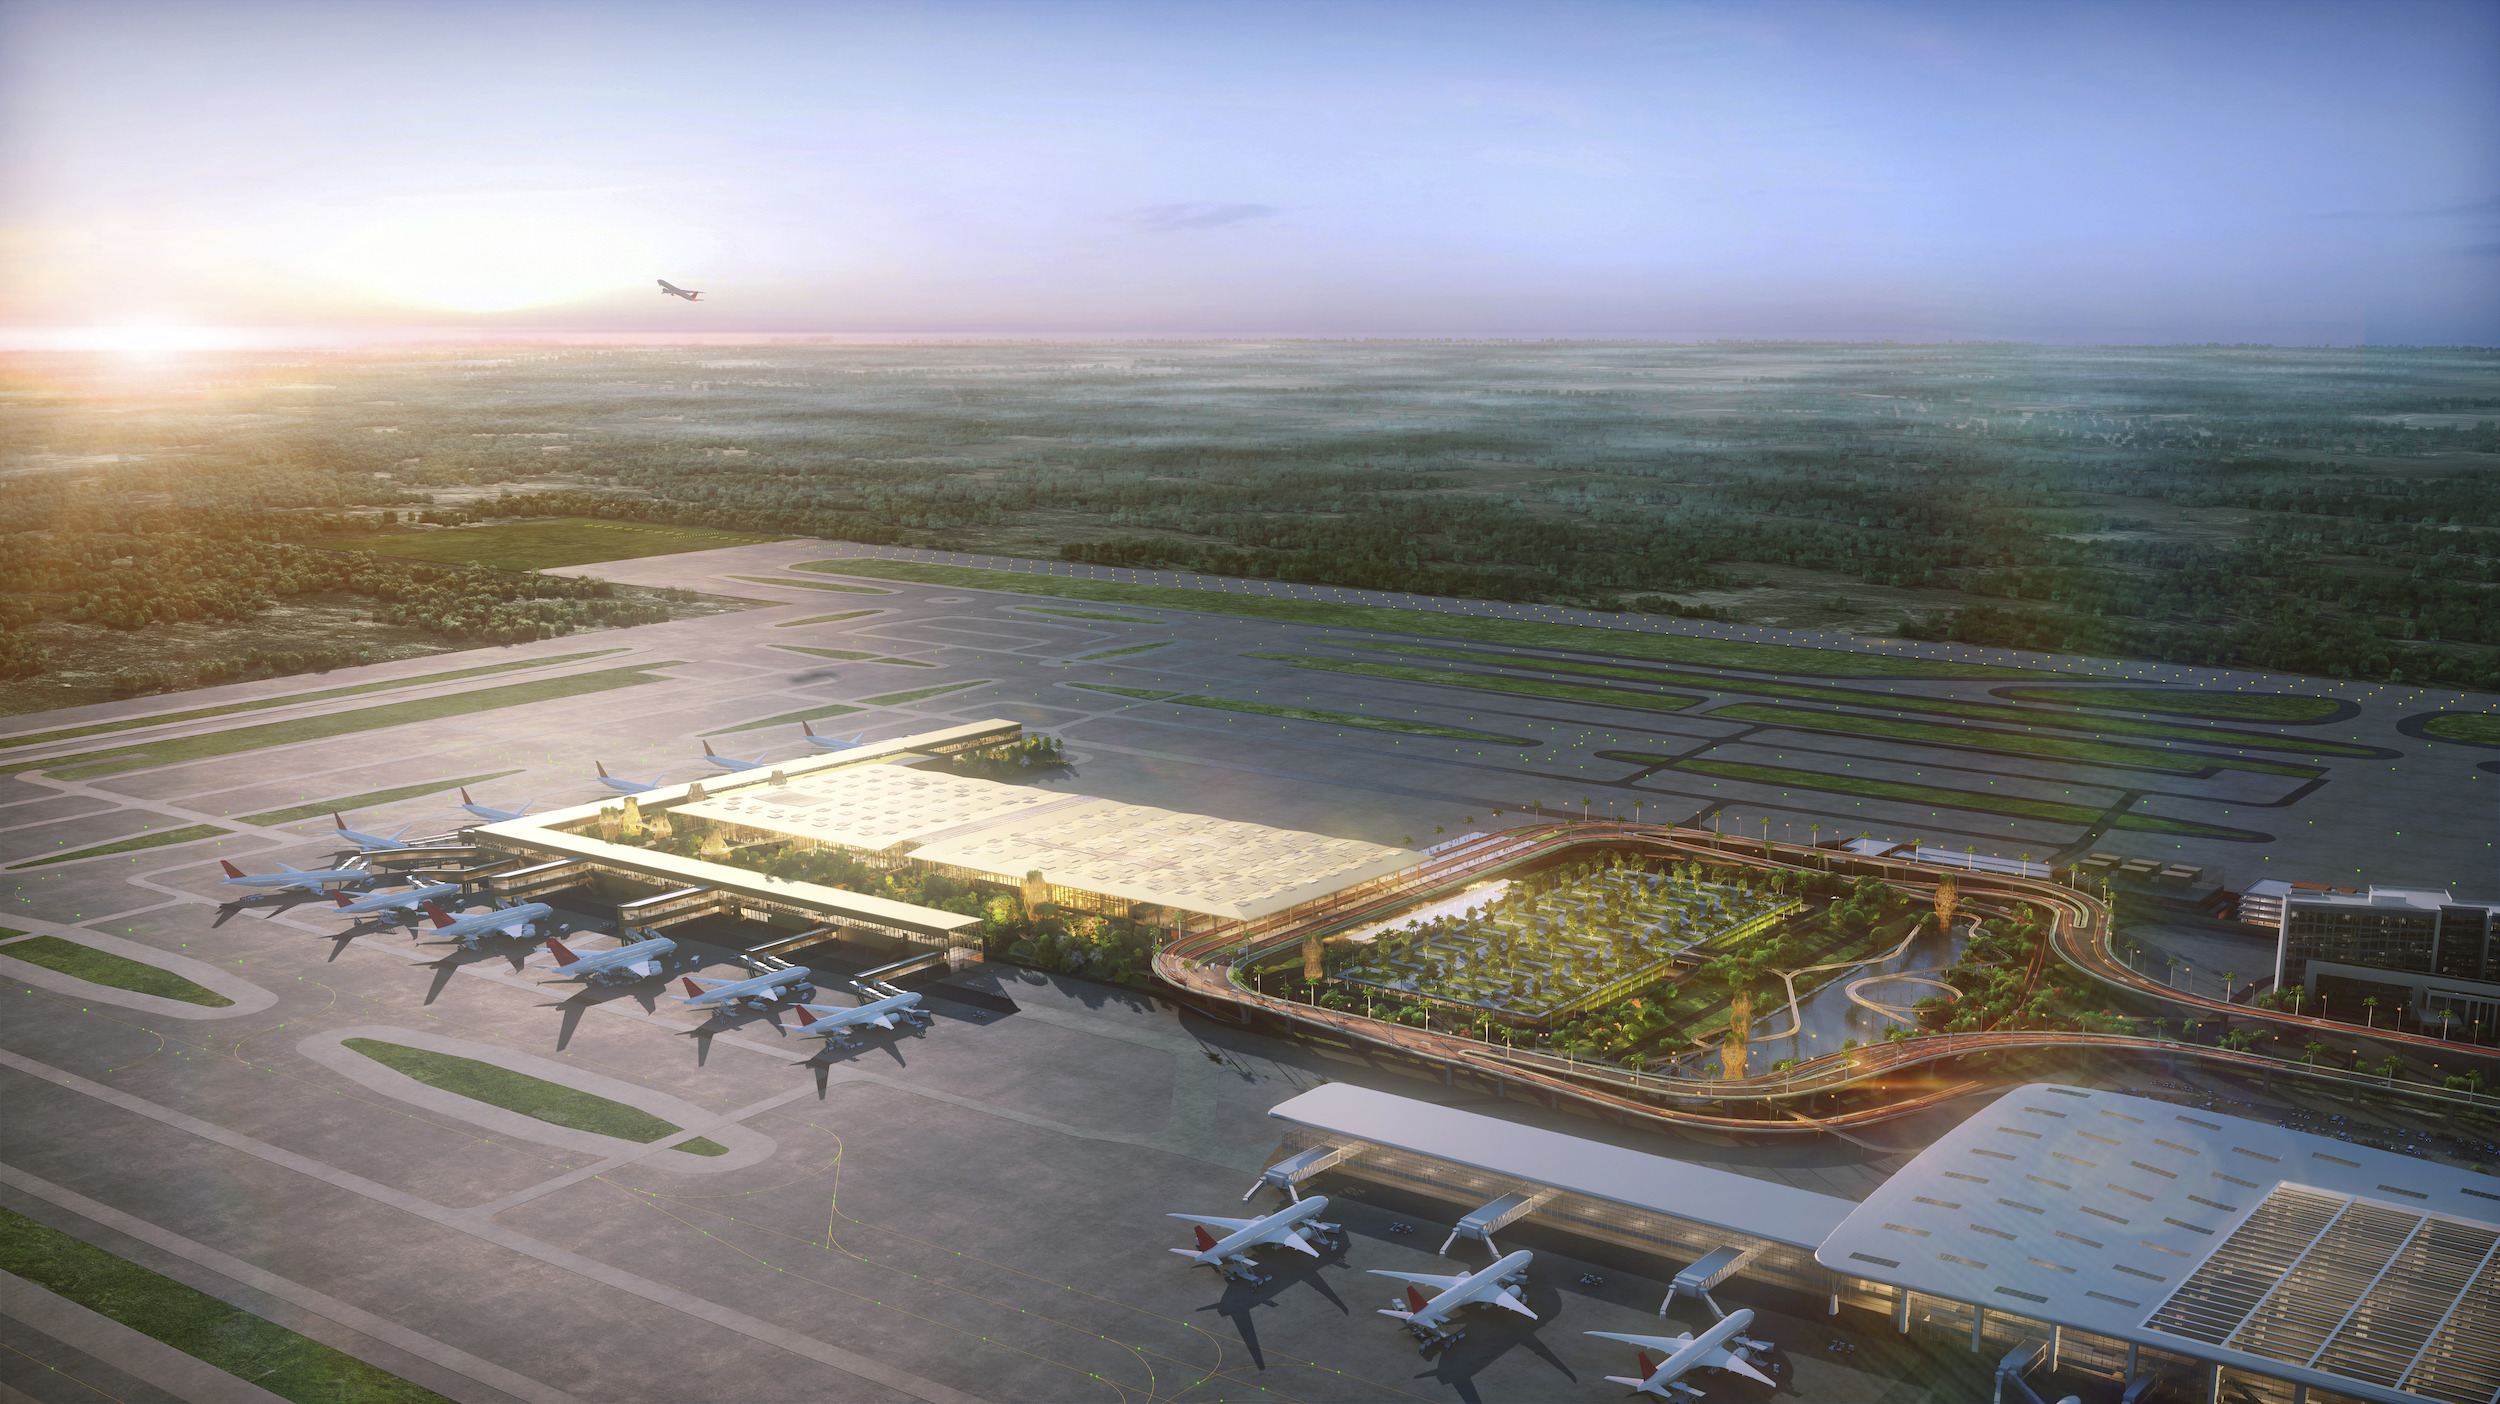 Terminal 2 of India’s Kempegowda International Airport is built around extensive indoor-outdoor landscaping. Rendering: Atchain|SOM